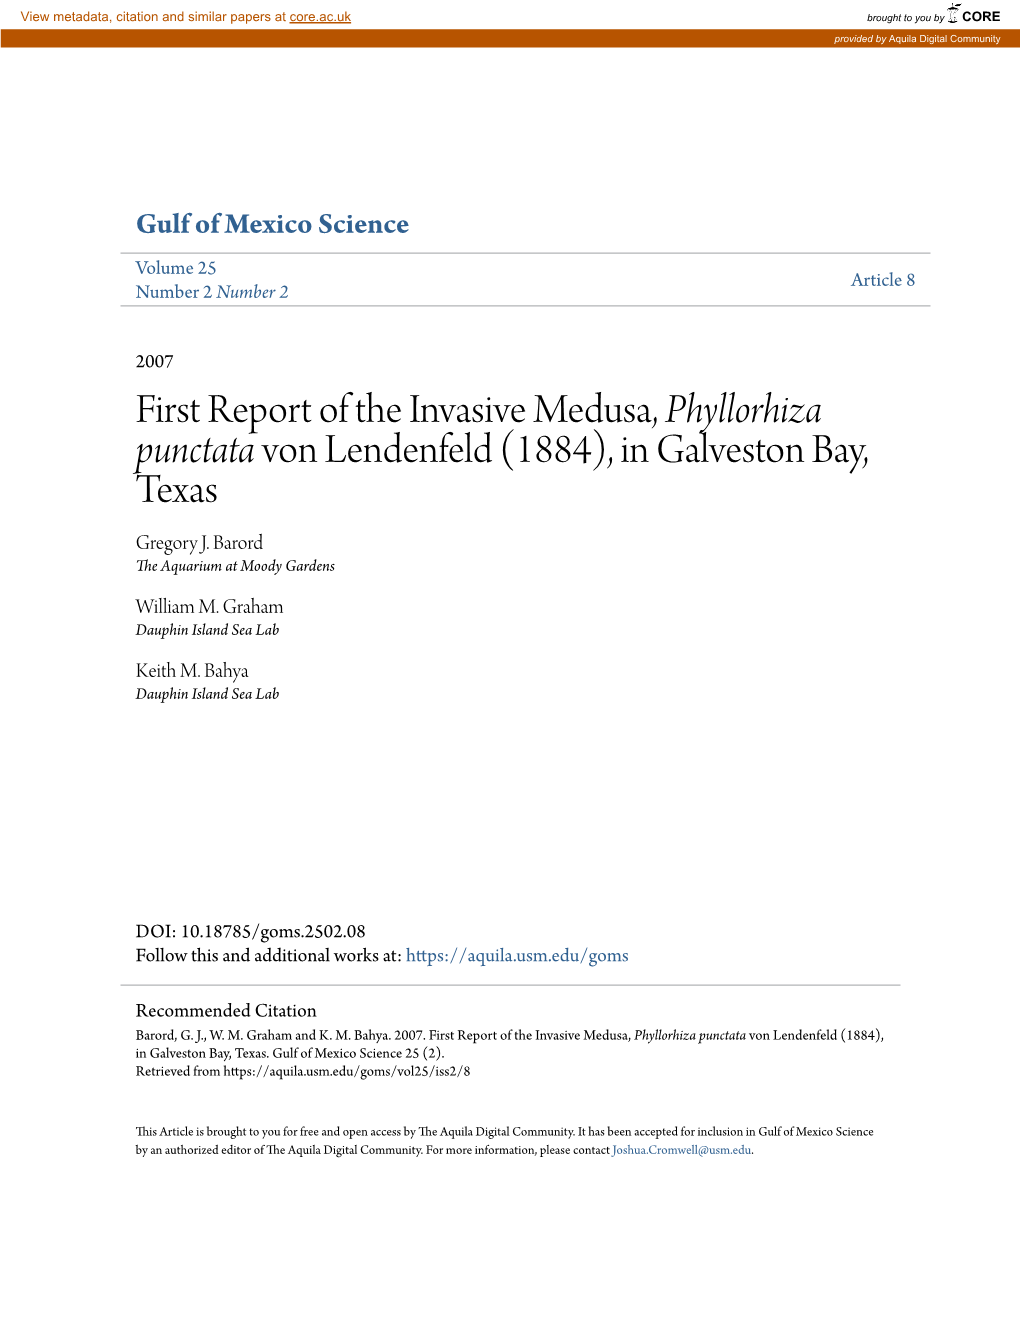 First Report of the Invasive Medusa, Phyllorhiza Punctata Von Lendenfeld (1884), in Galveston Bay, Texas Gregory J